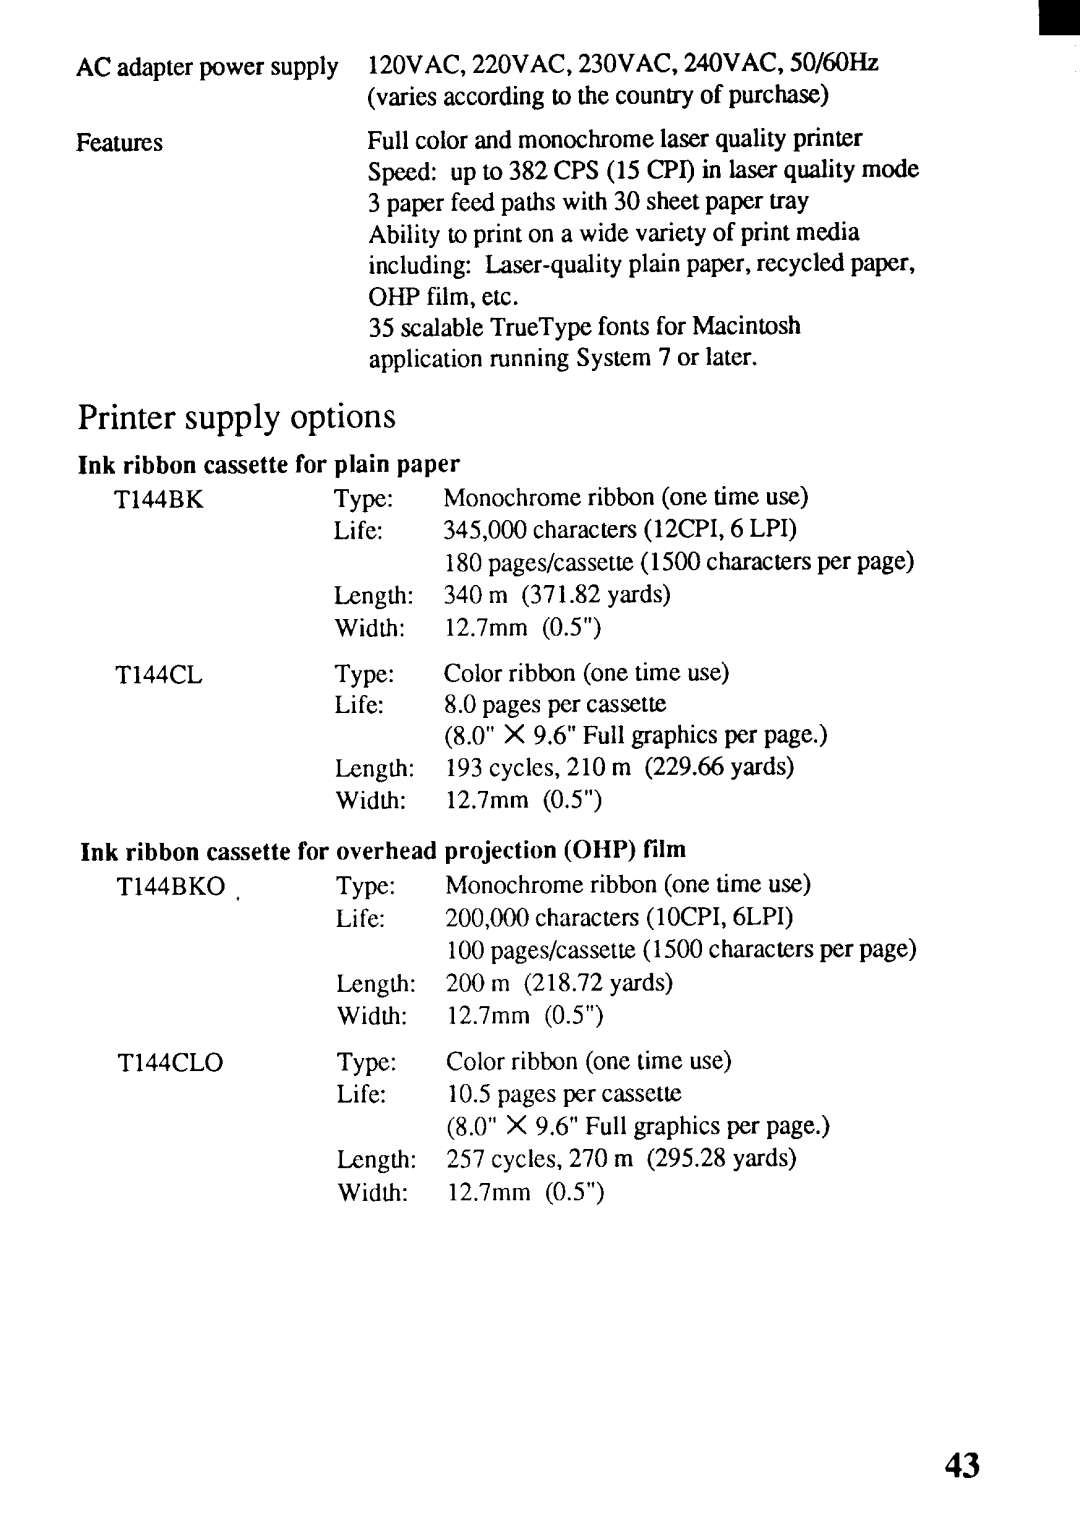 Star Micronics SJ-144MC user manual Printer supply options 